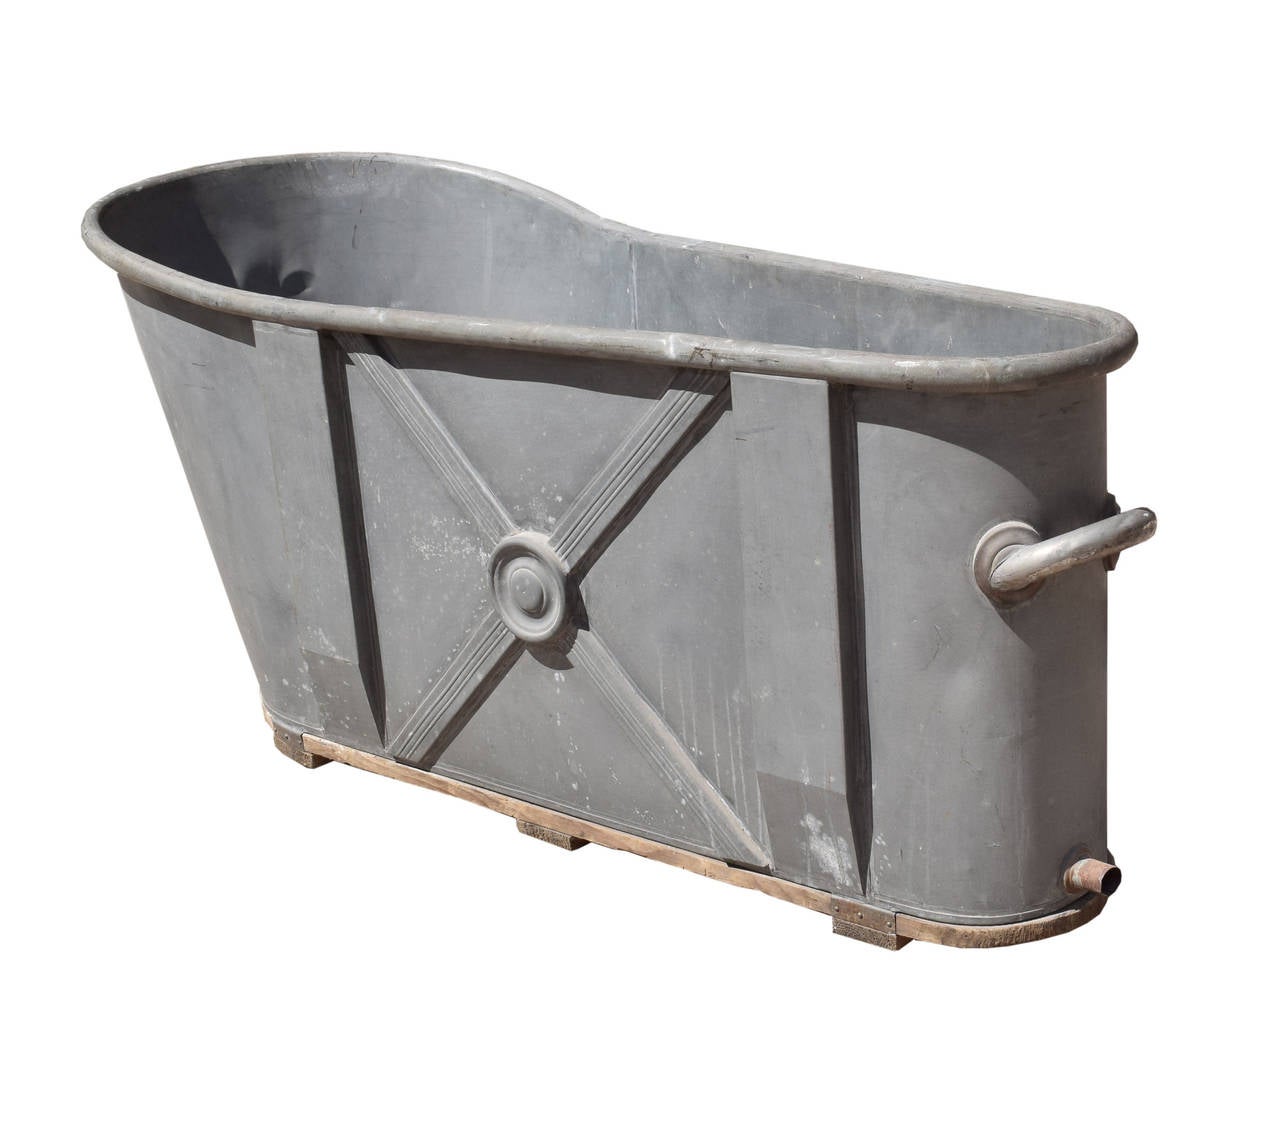 Late 19th century French zinc bathing or soaking tub.